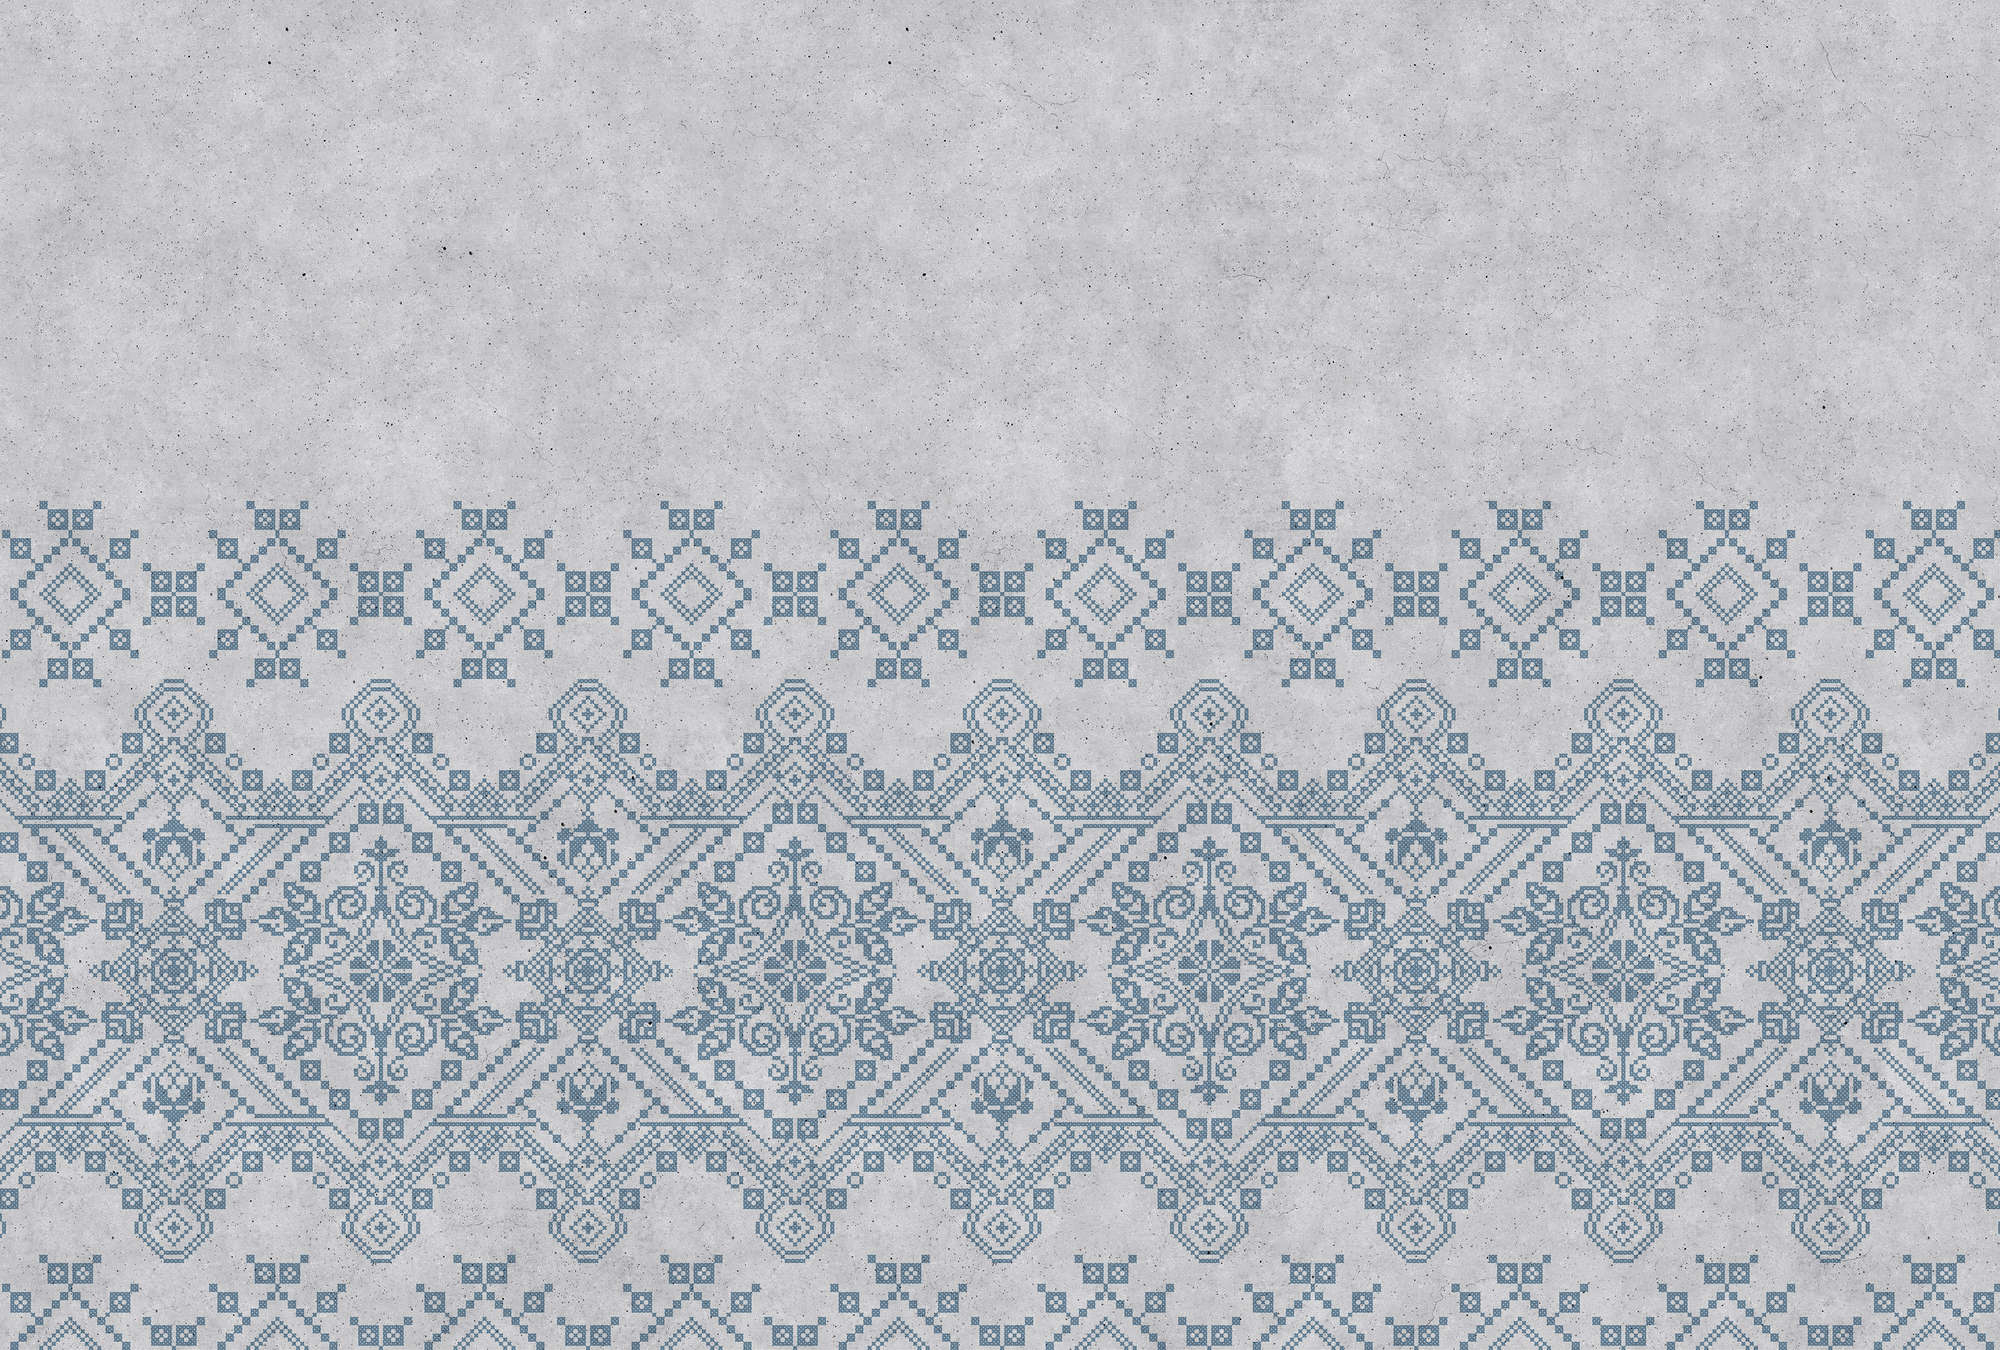             Papier peint avec motif scandinave brodé - gris, bleu
        